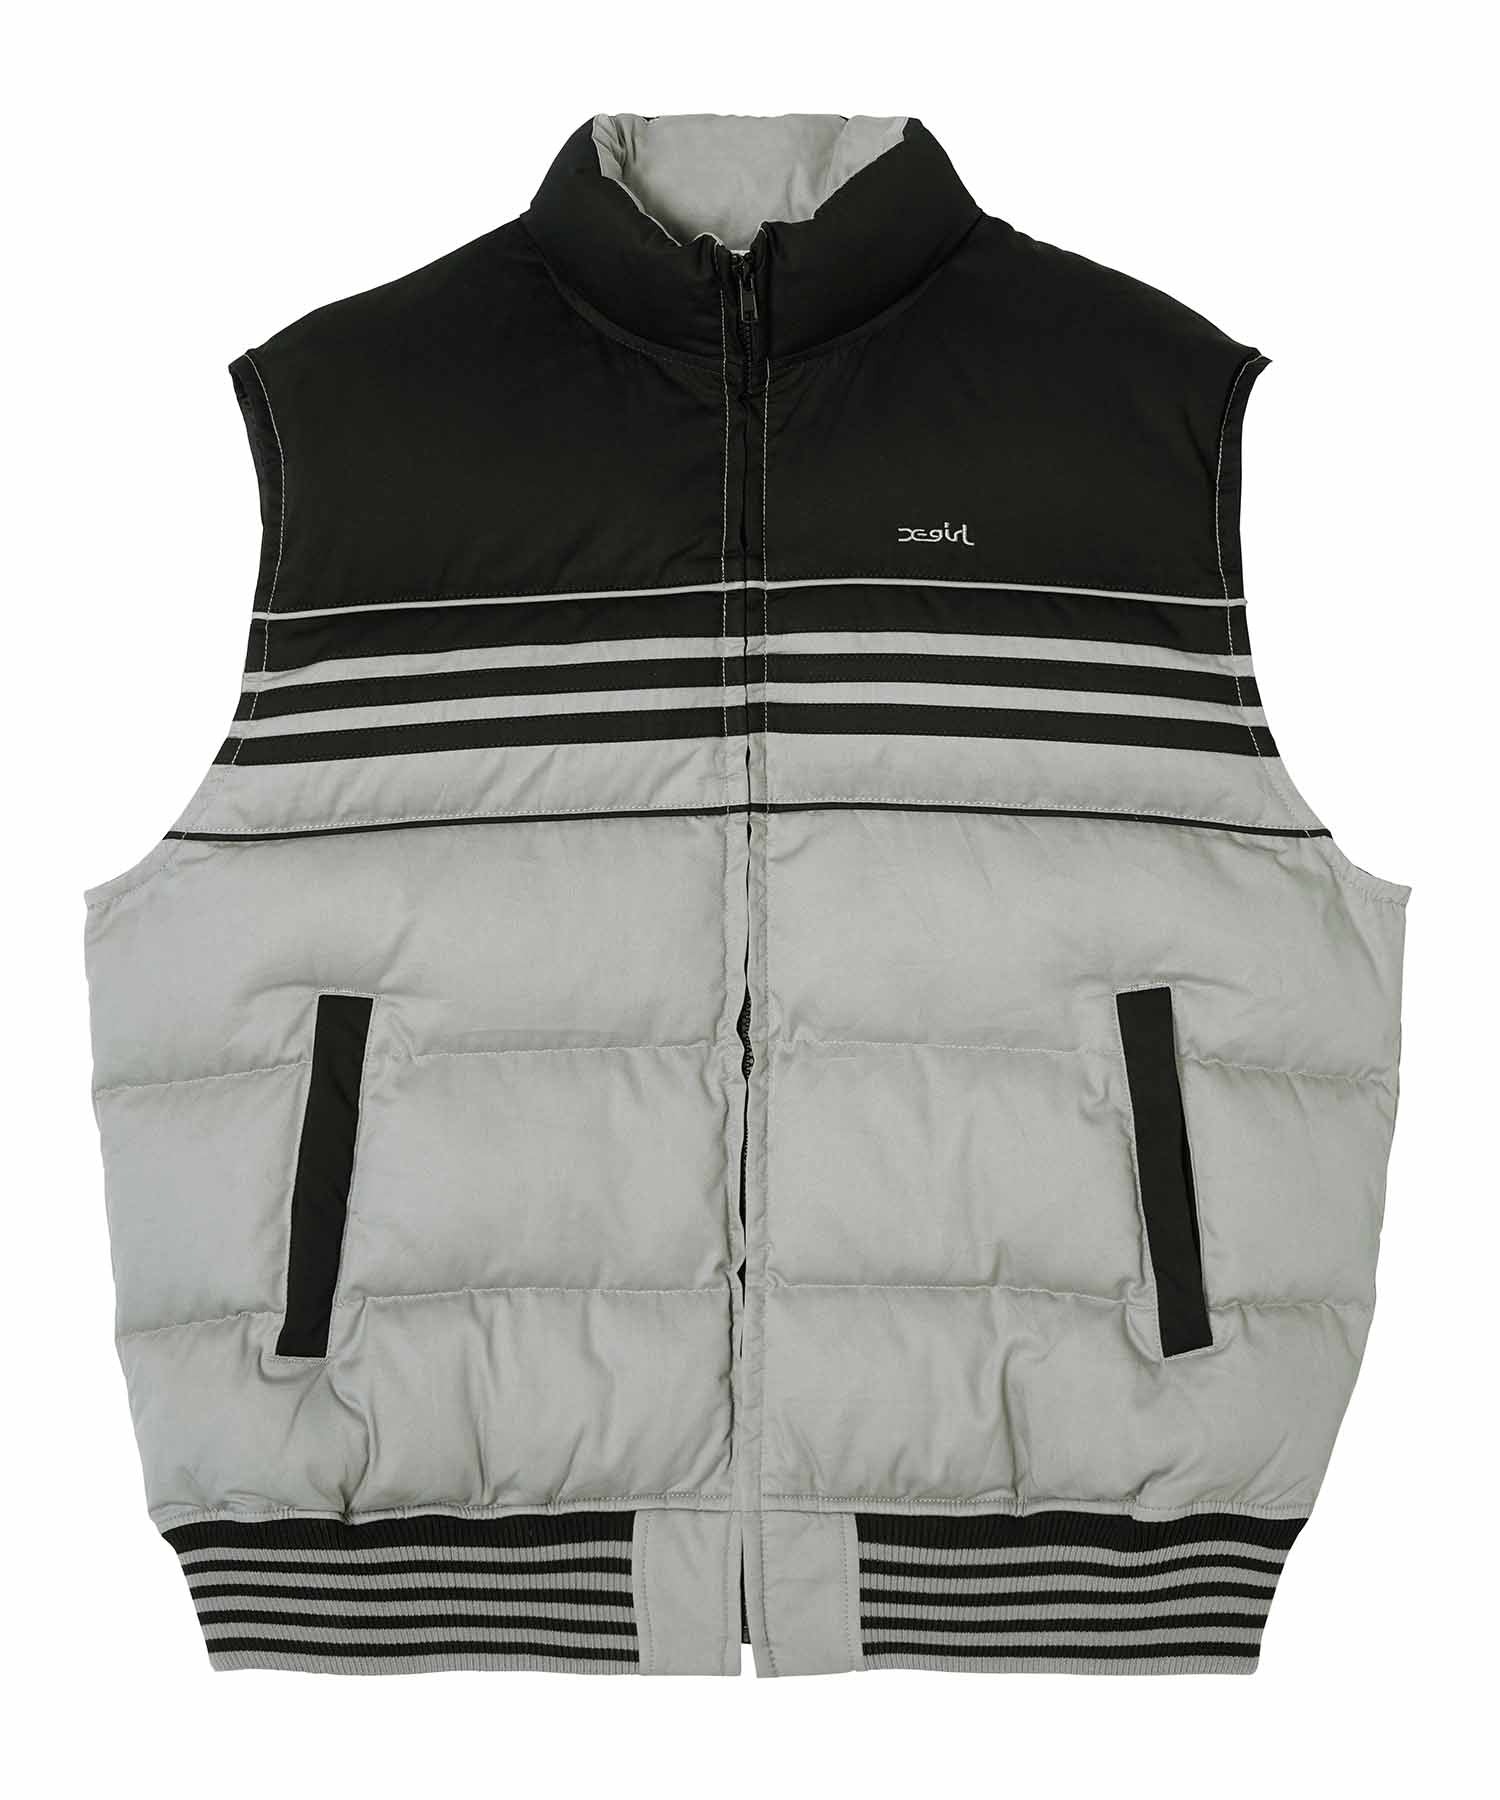 Custom Sleeveless Winter Jackets & Half Warm Jackets for Men & Women |  VistaPrint